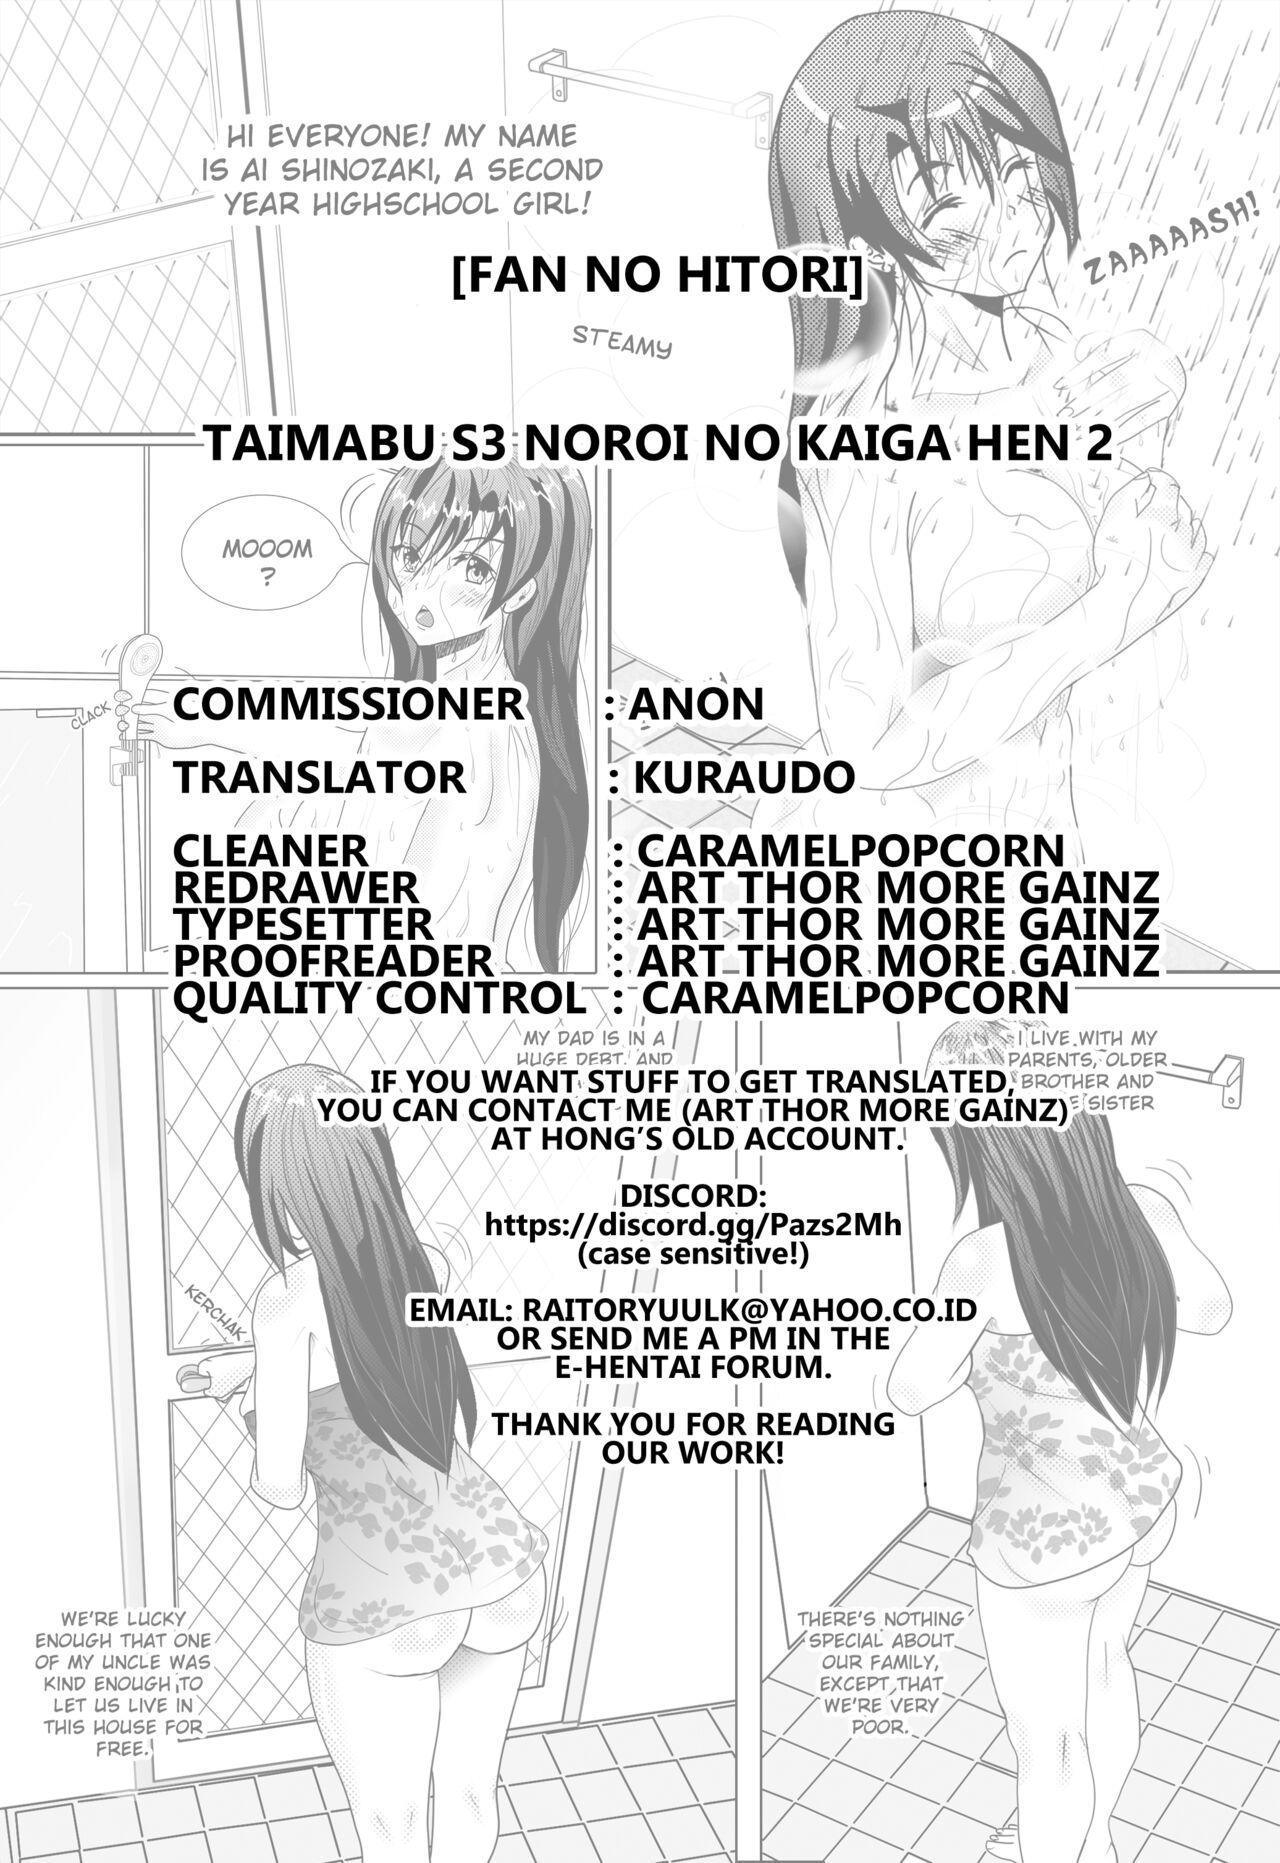 Taimabu S3 Noroi no Kaiga Hen 2 | Taimabu Season 3 Taimabu The Cursed Paintings, Chapter 2 13